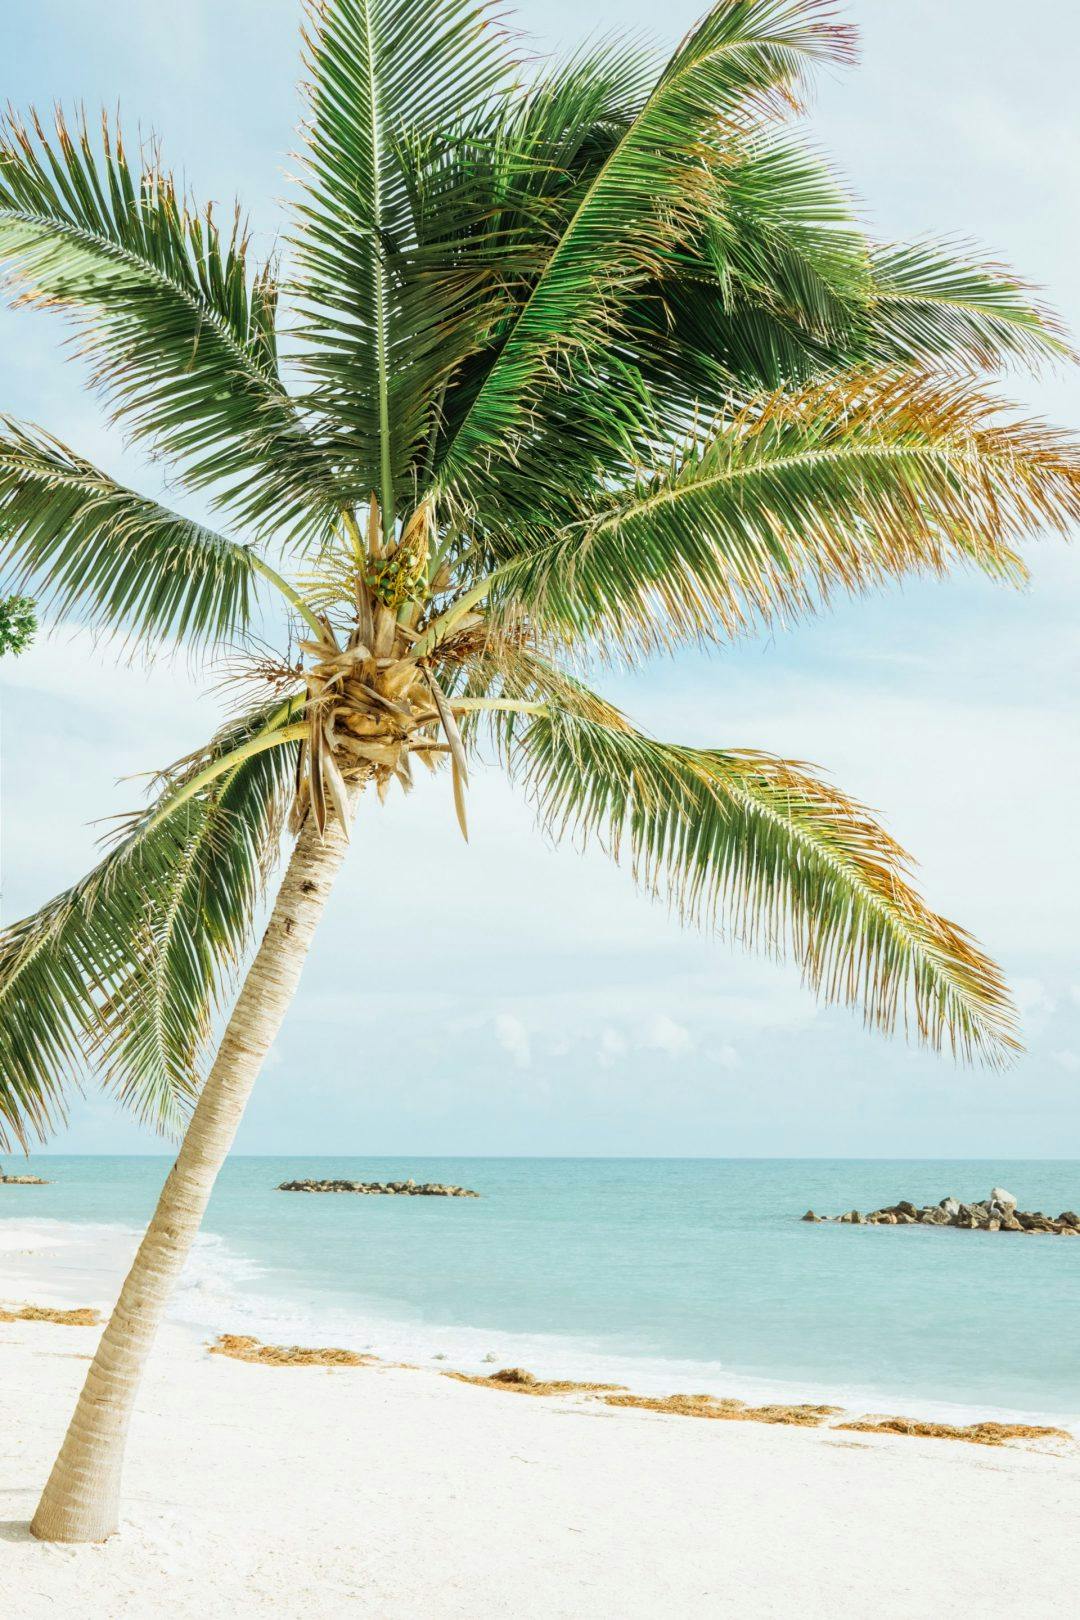 A palmtree on the beach in the keys